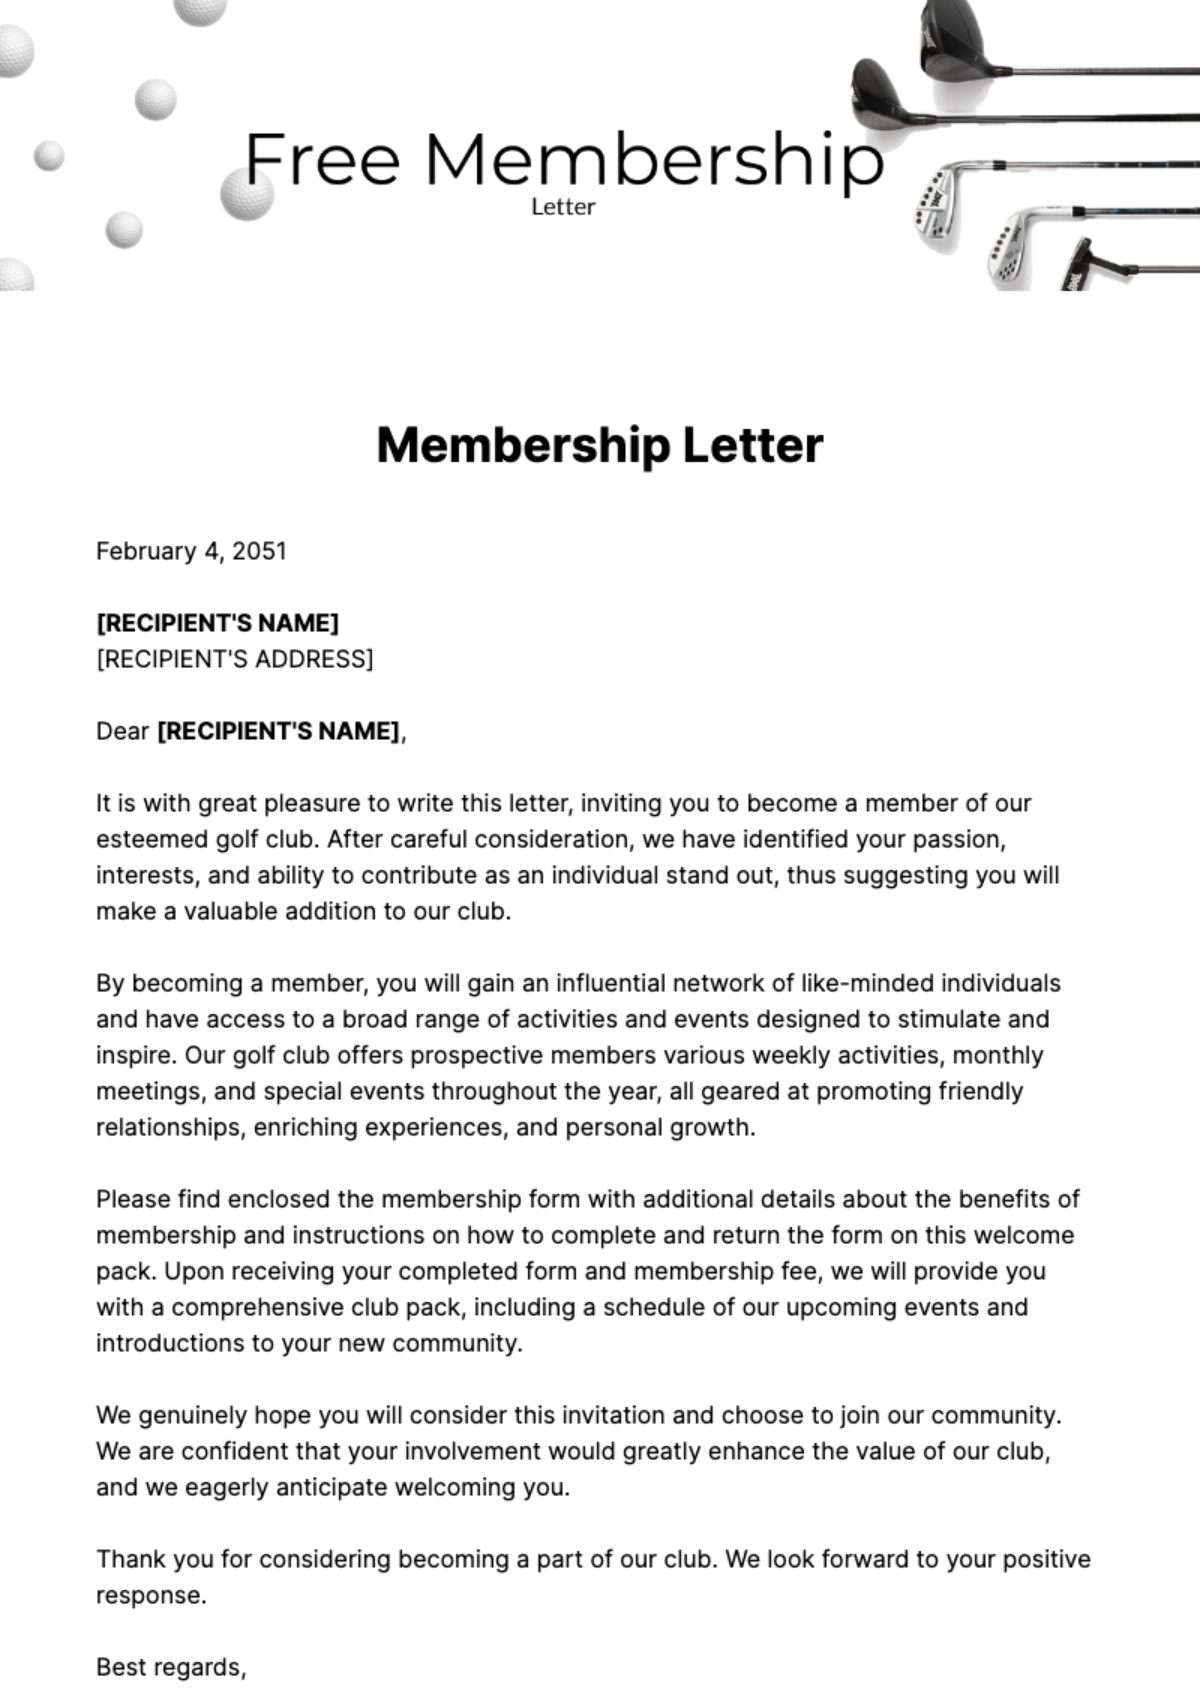 Free Membership Letter Template